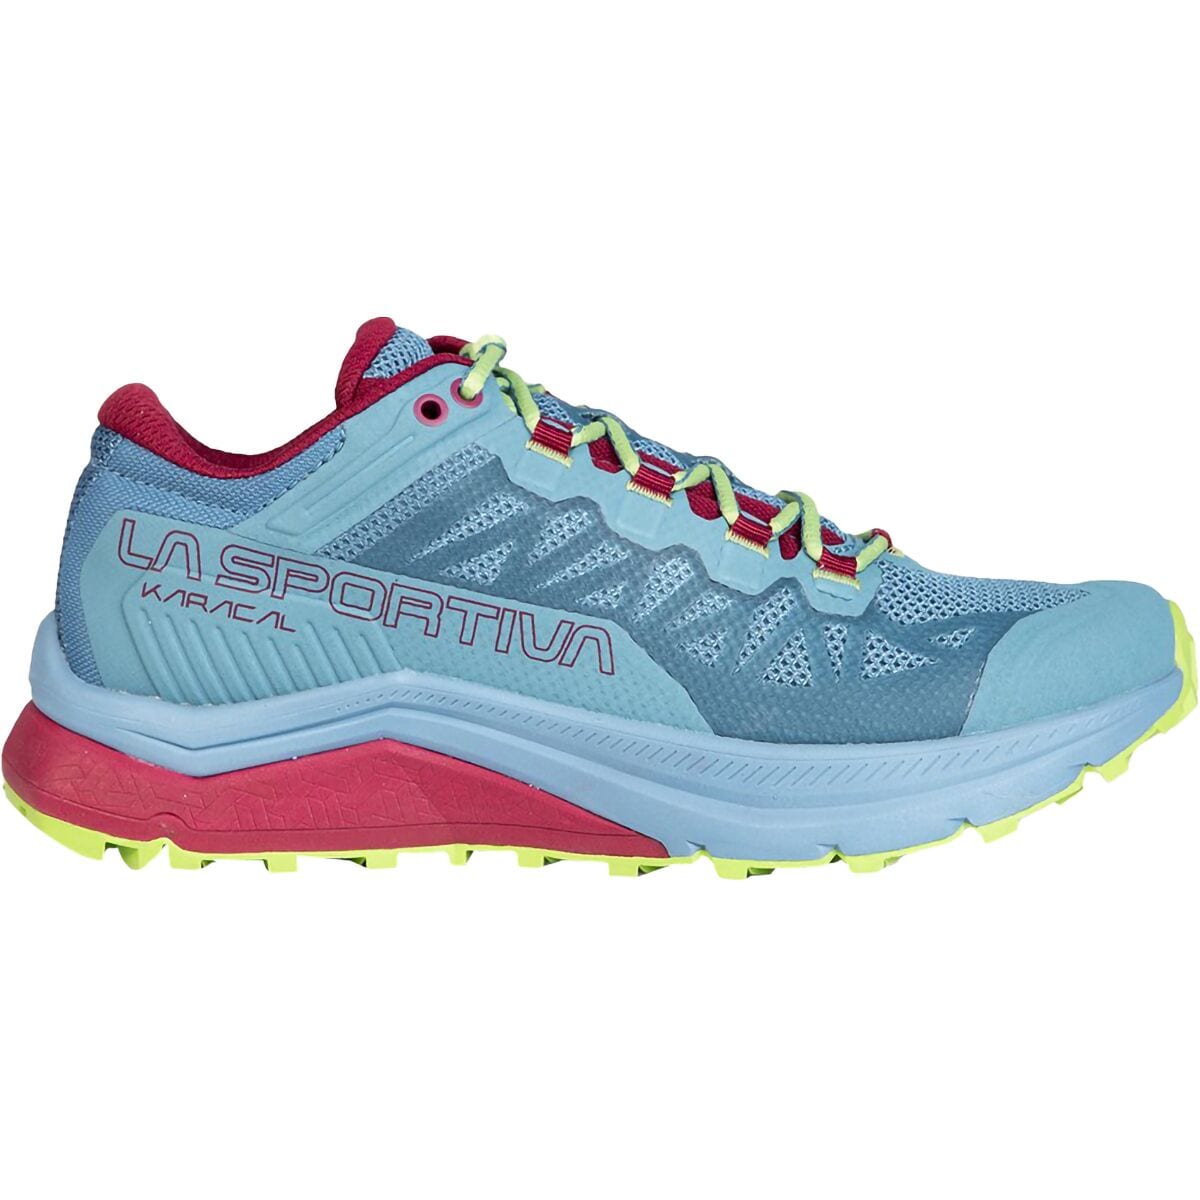 Karacal Trail Running Shoe - Women